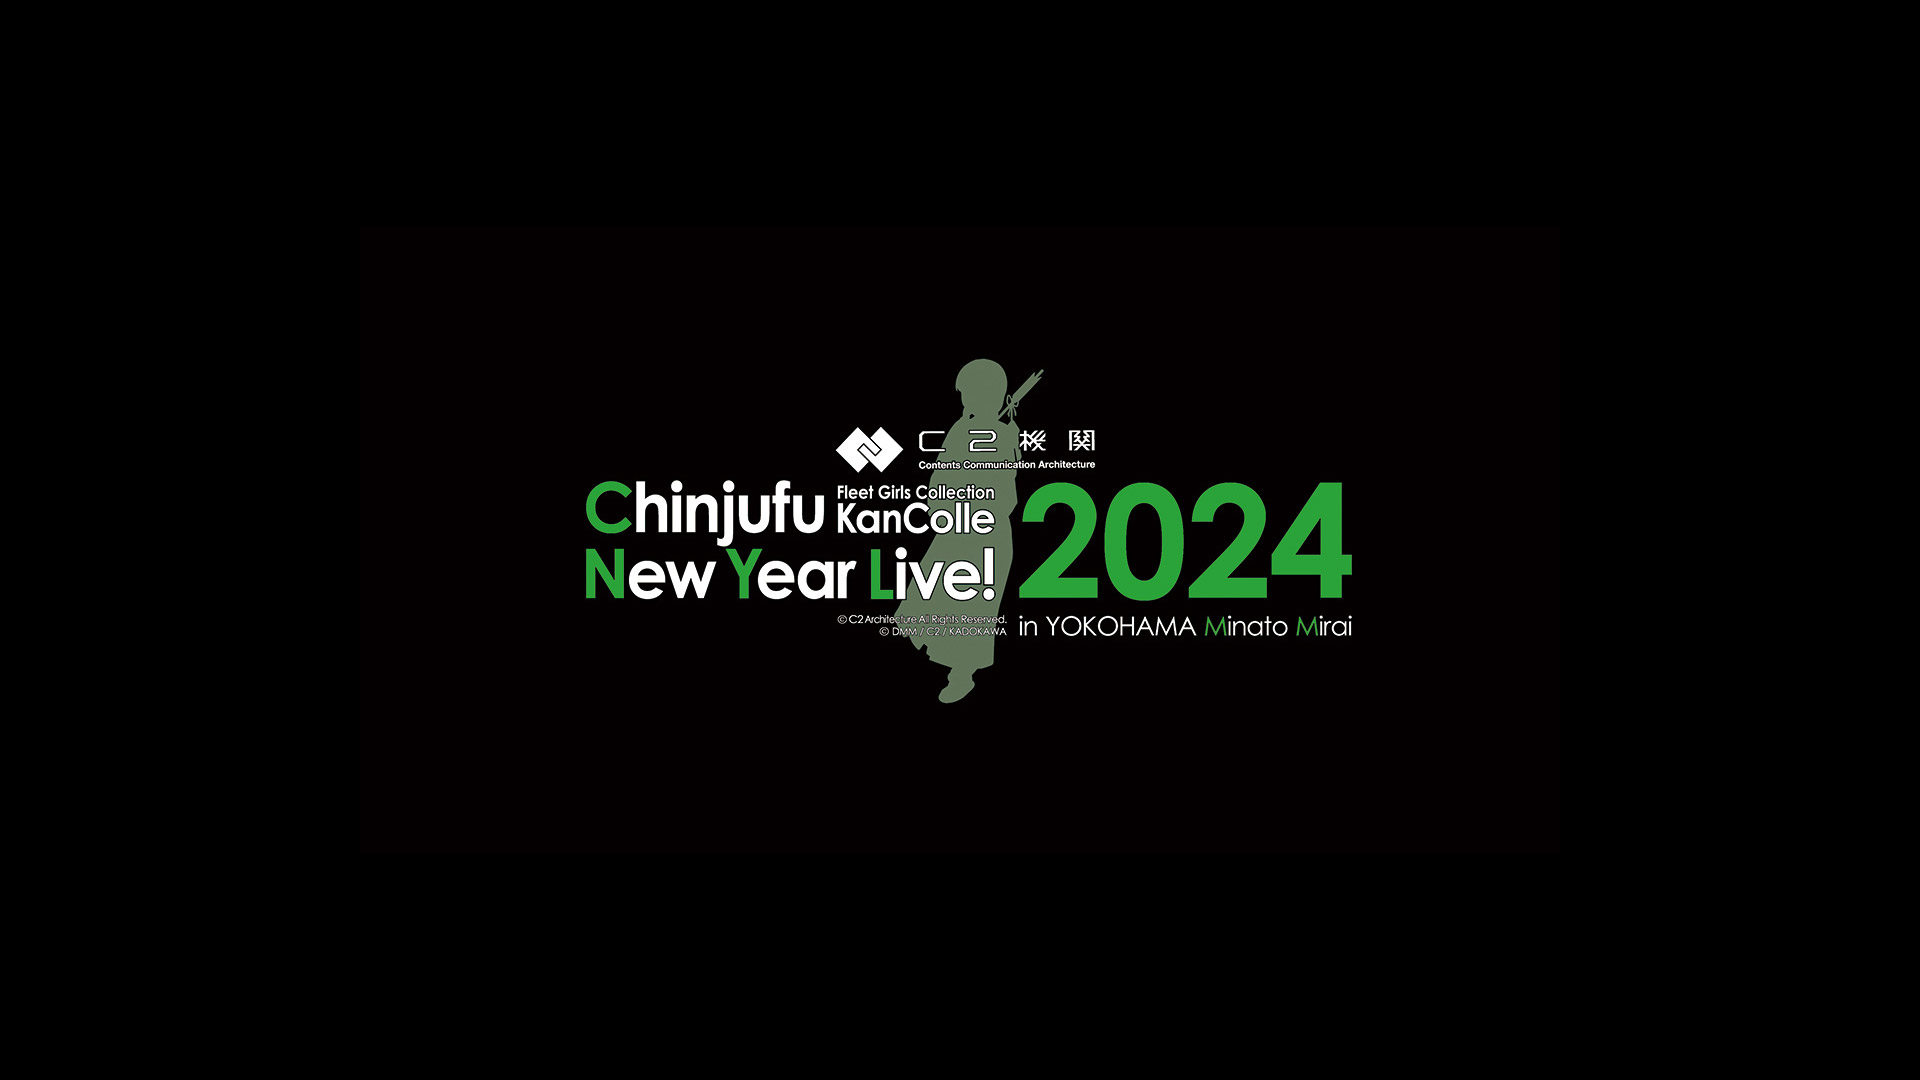 C2機関「艦これ」公式新春Live! 2024 Chinjufu New Year Live! 2024 in